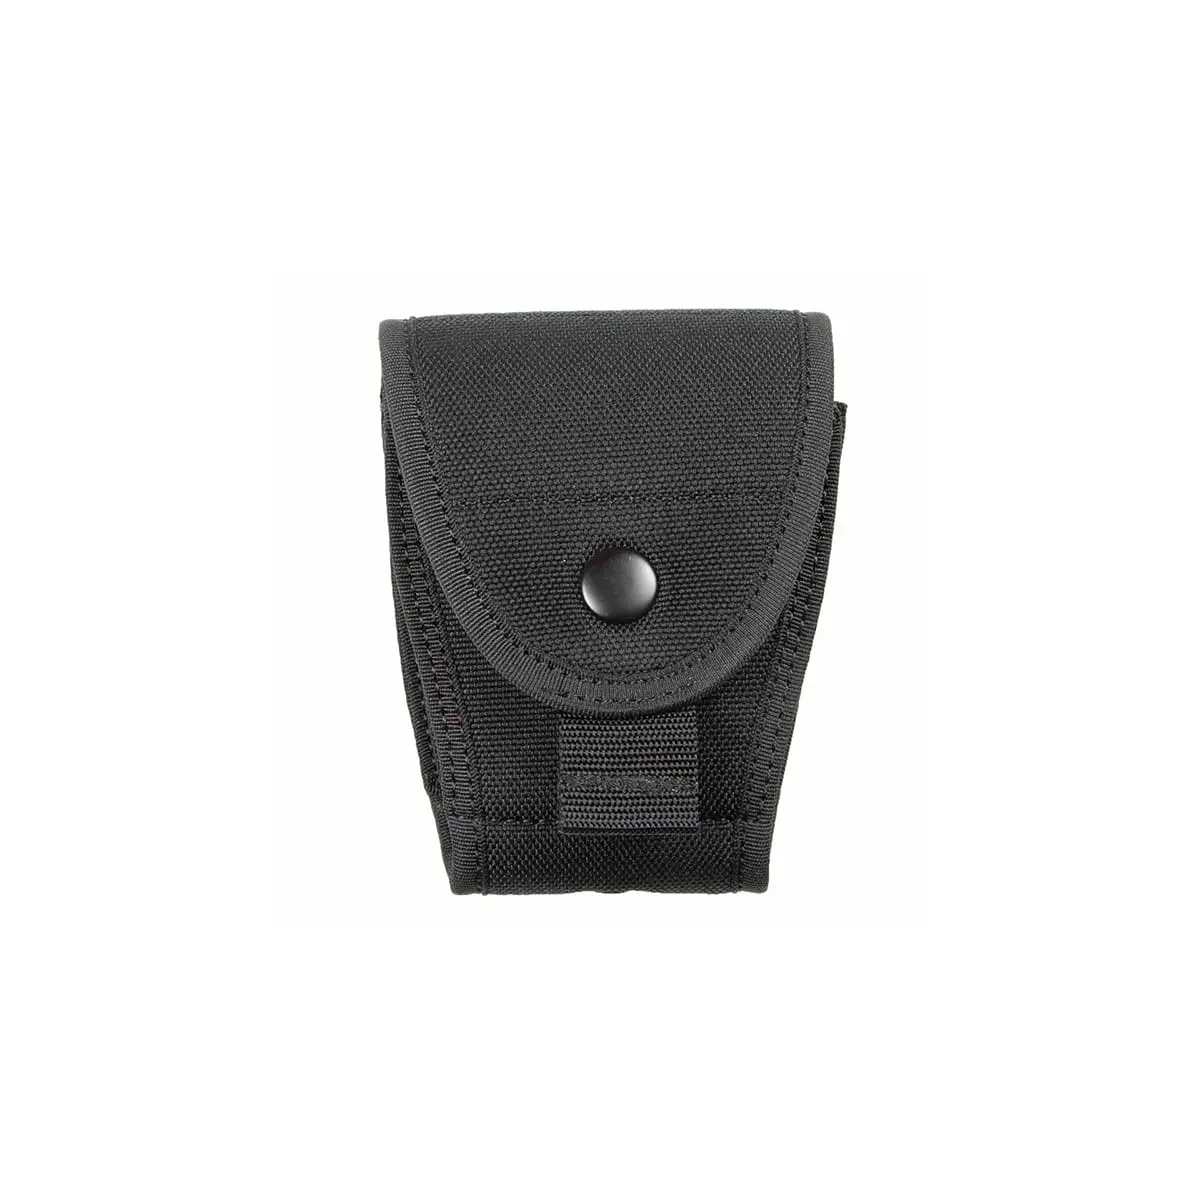 hiatt handcuff pouch 003 black molle belt 4